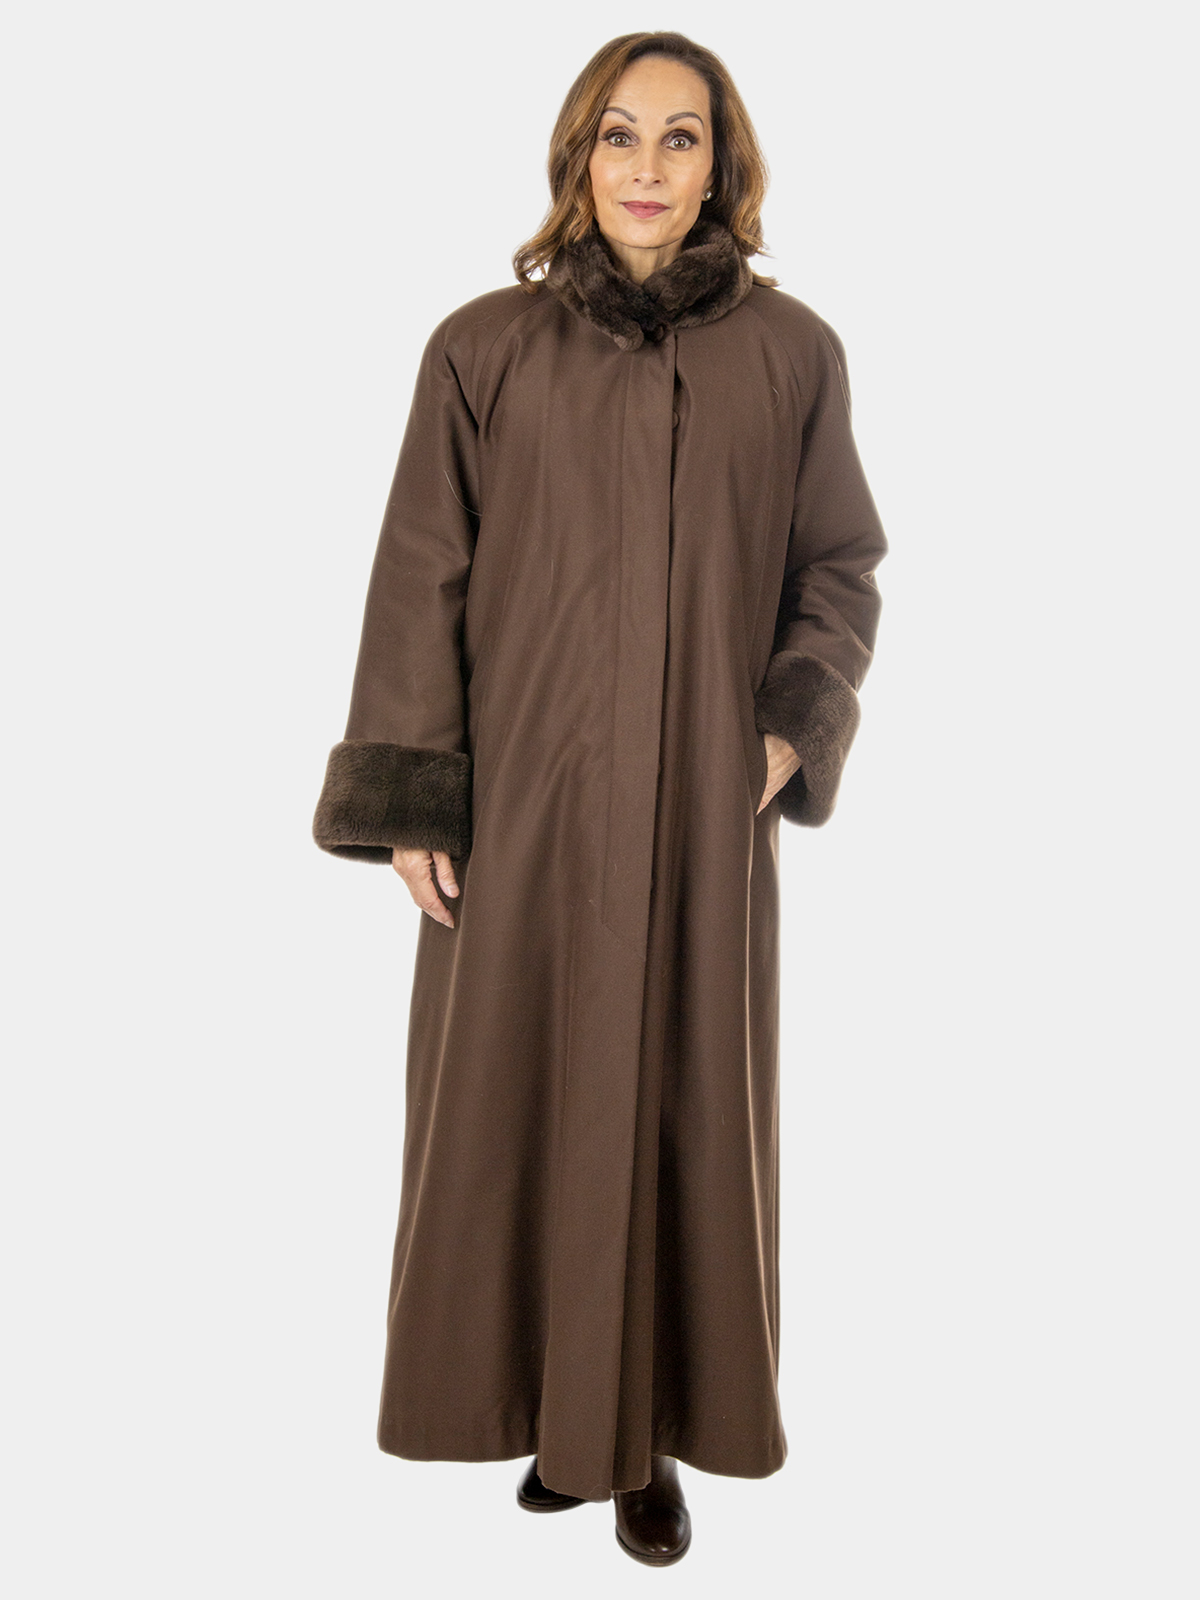 Woman's Brown Sheared Nutria Fur Lined Microfiber Raincoat